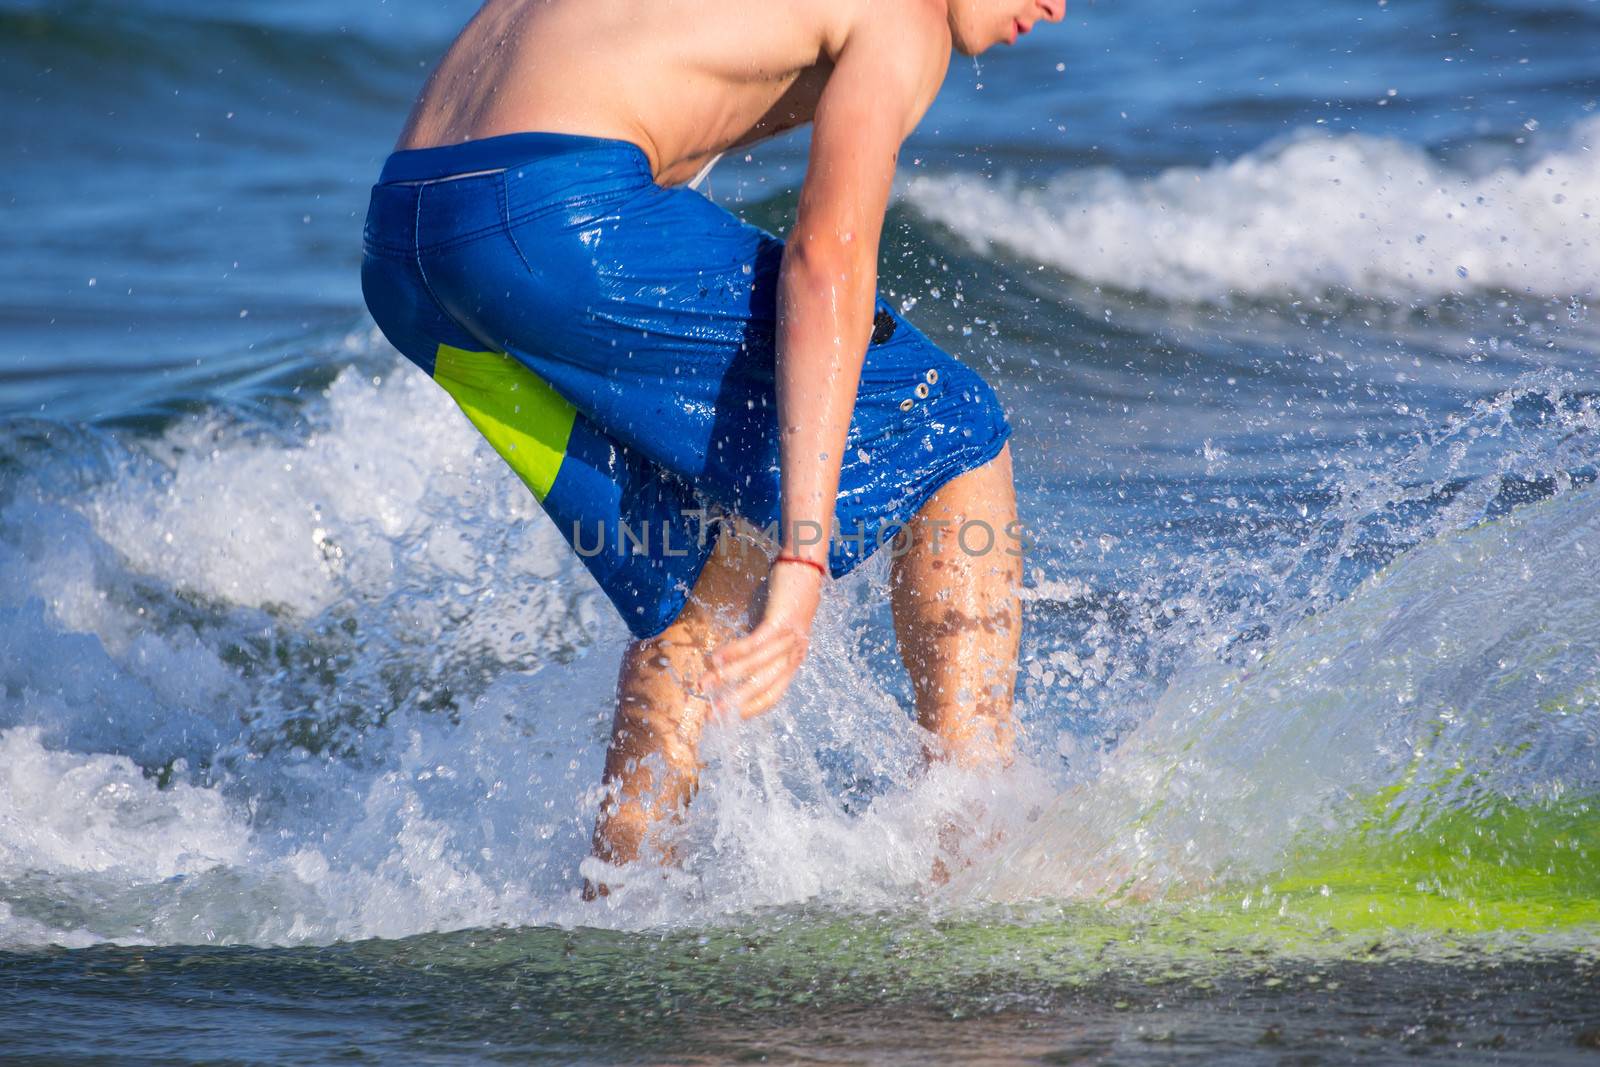 Boy surfer surfing waves on the beach by lunamarina